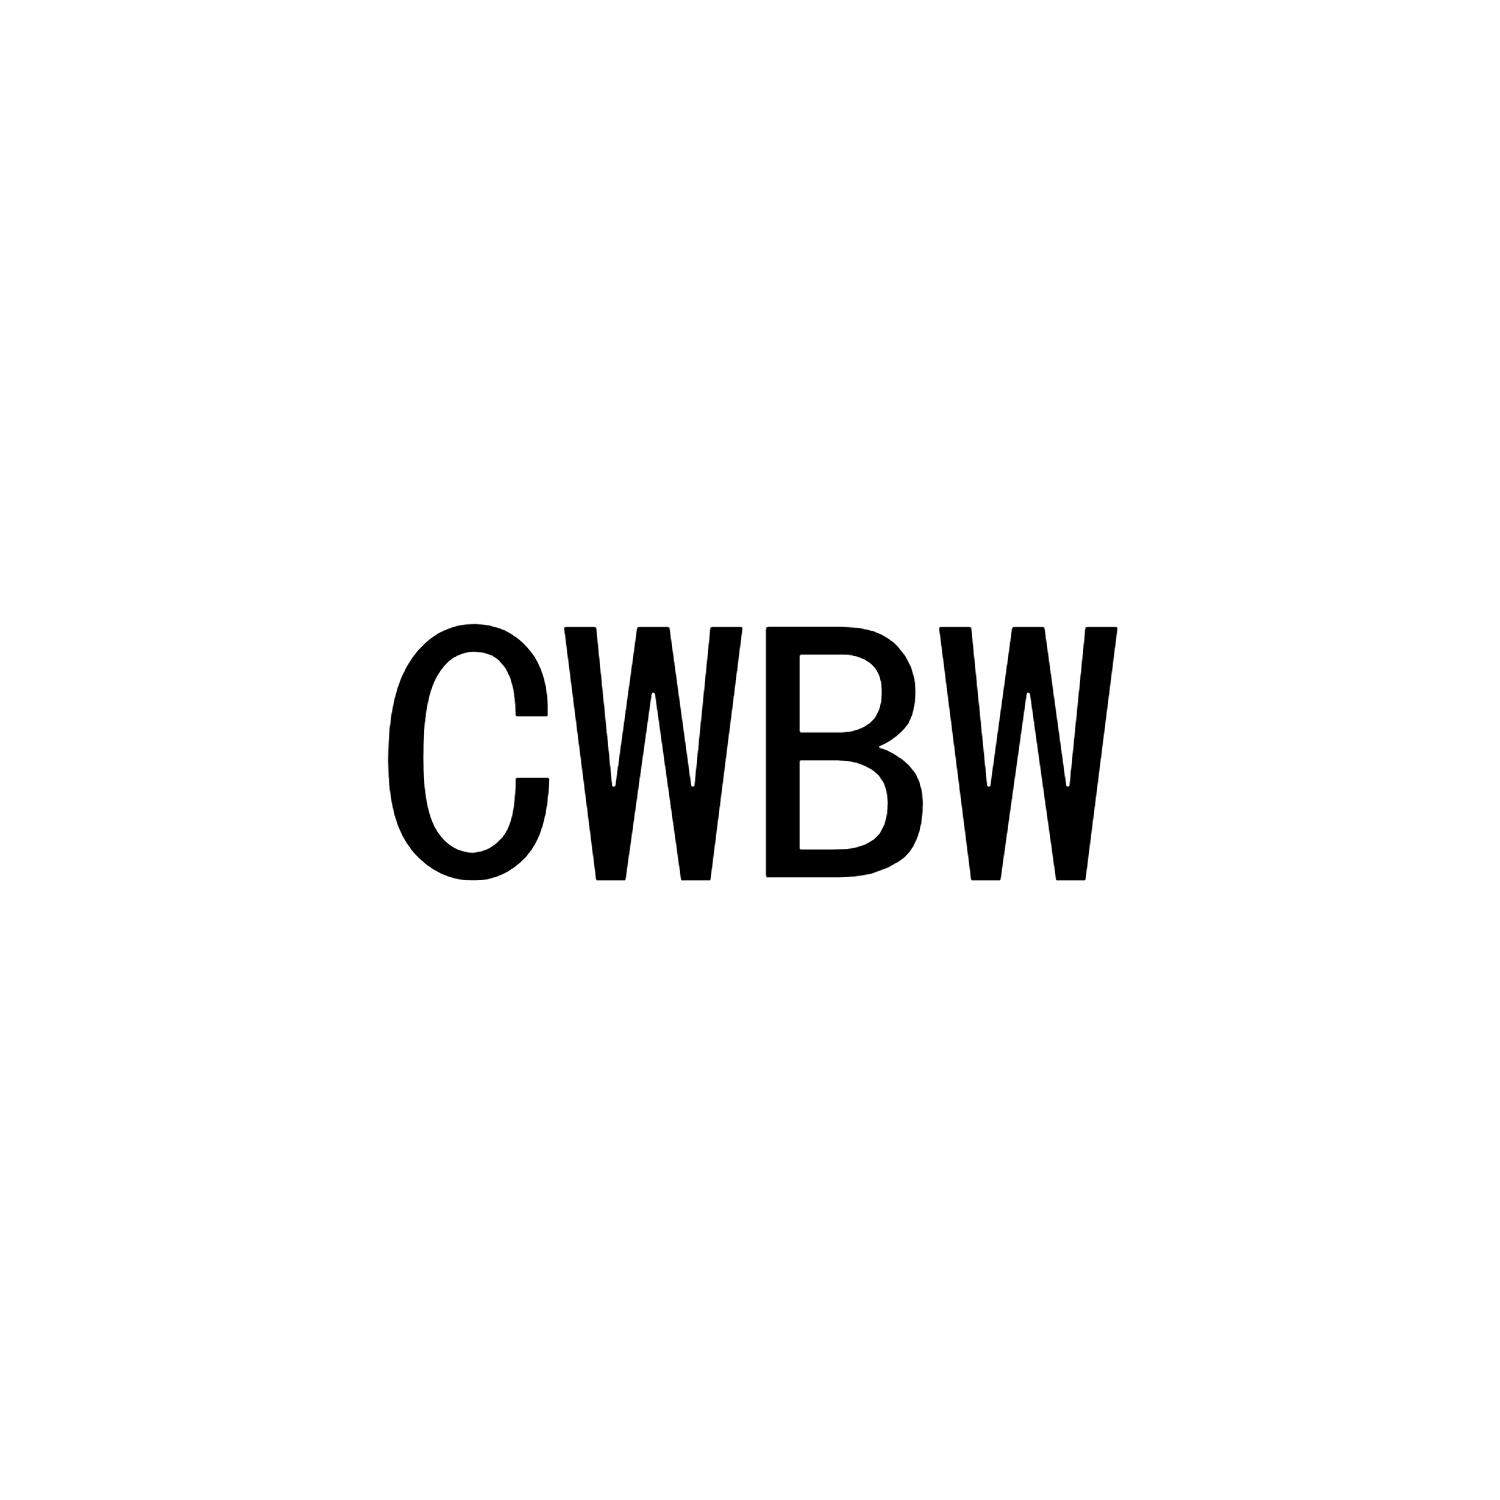 CWBW